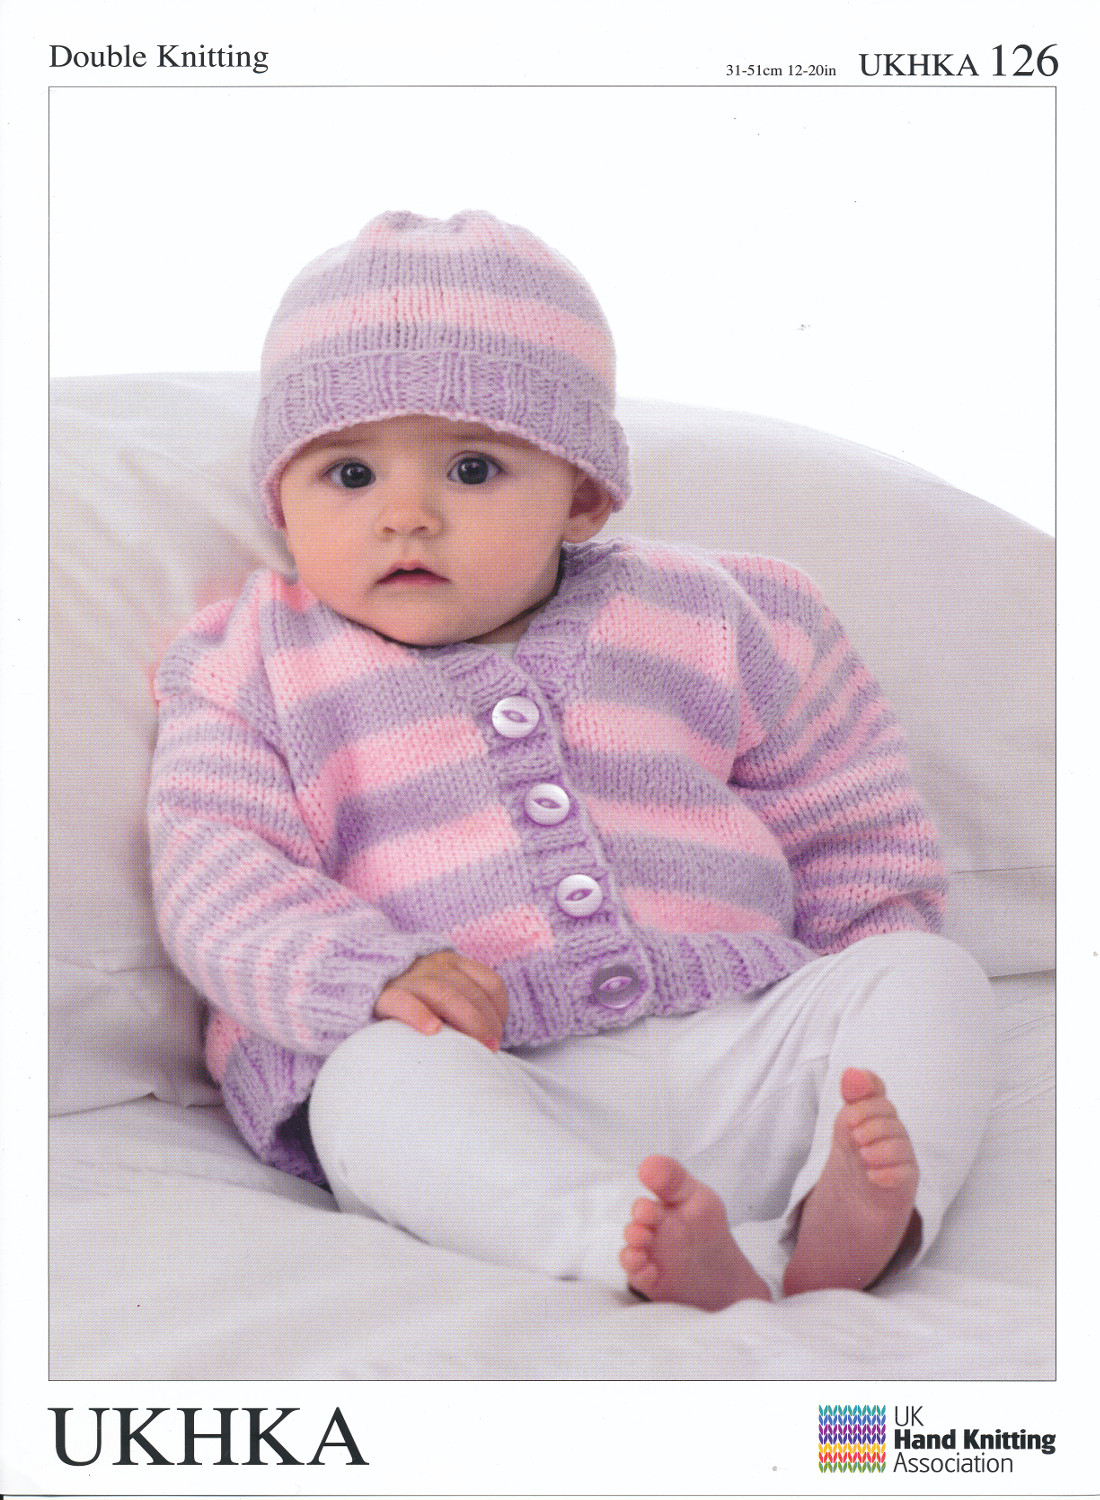 Free Uk Baby Knitting Patterns Details About Double Knitting Dk Pattern Ba Long Sleeved Striped Cardigan Hat Ukhka 126